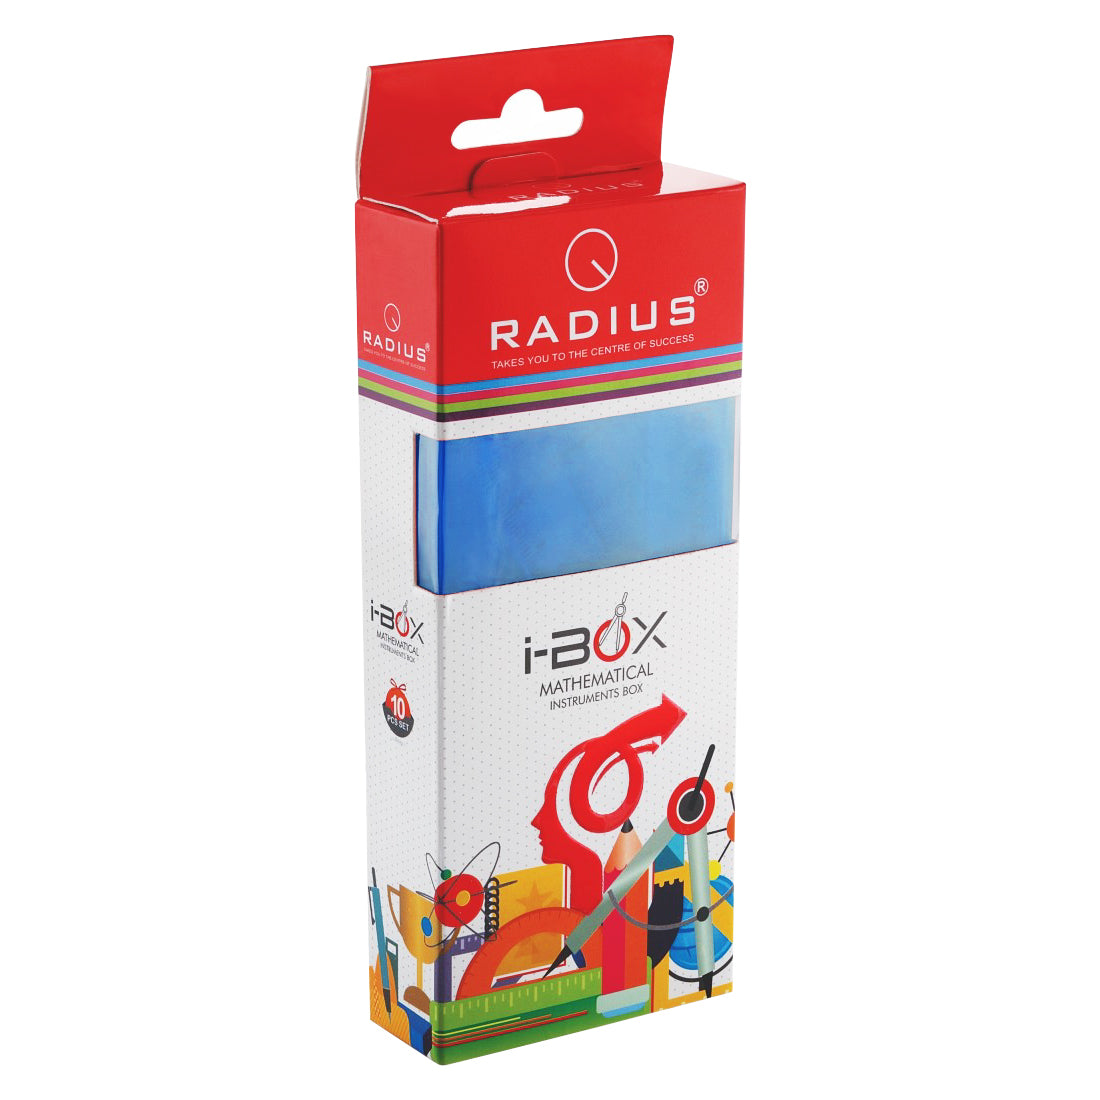 Radius I-Box Mathematical Instruments Box -  Pack of 2